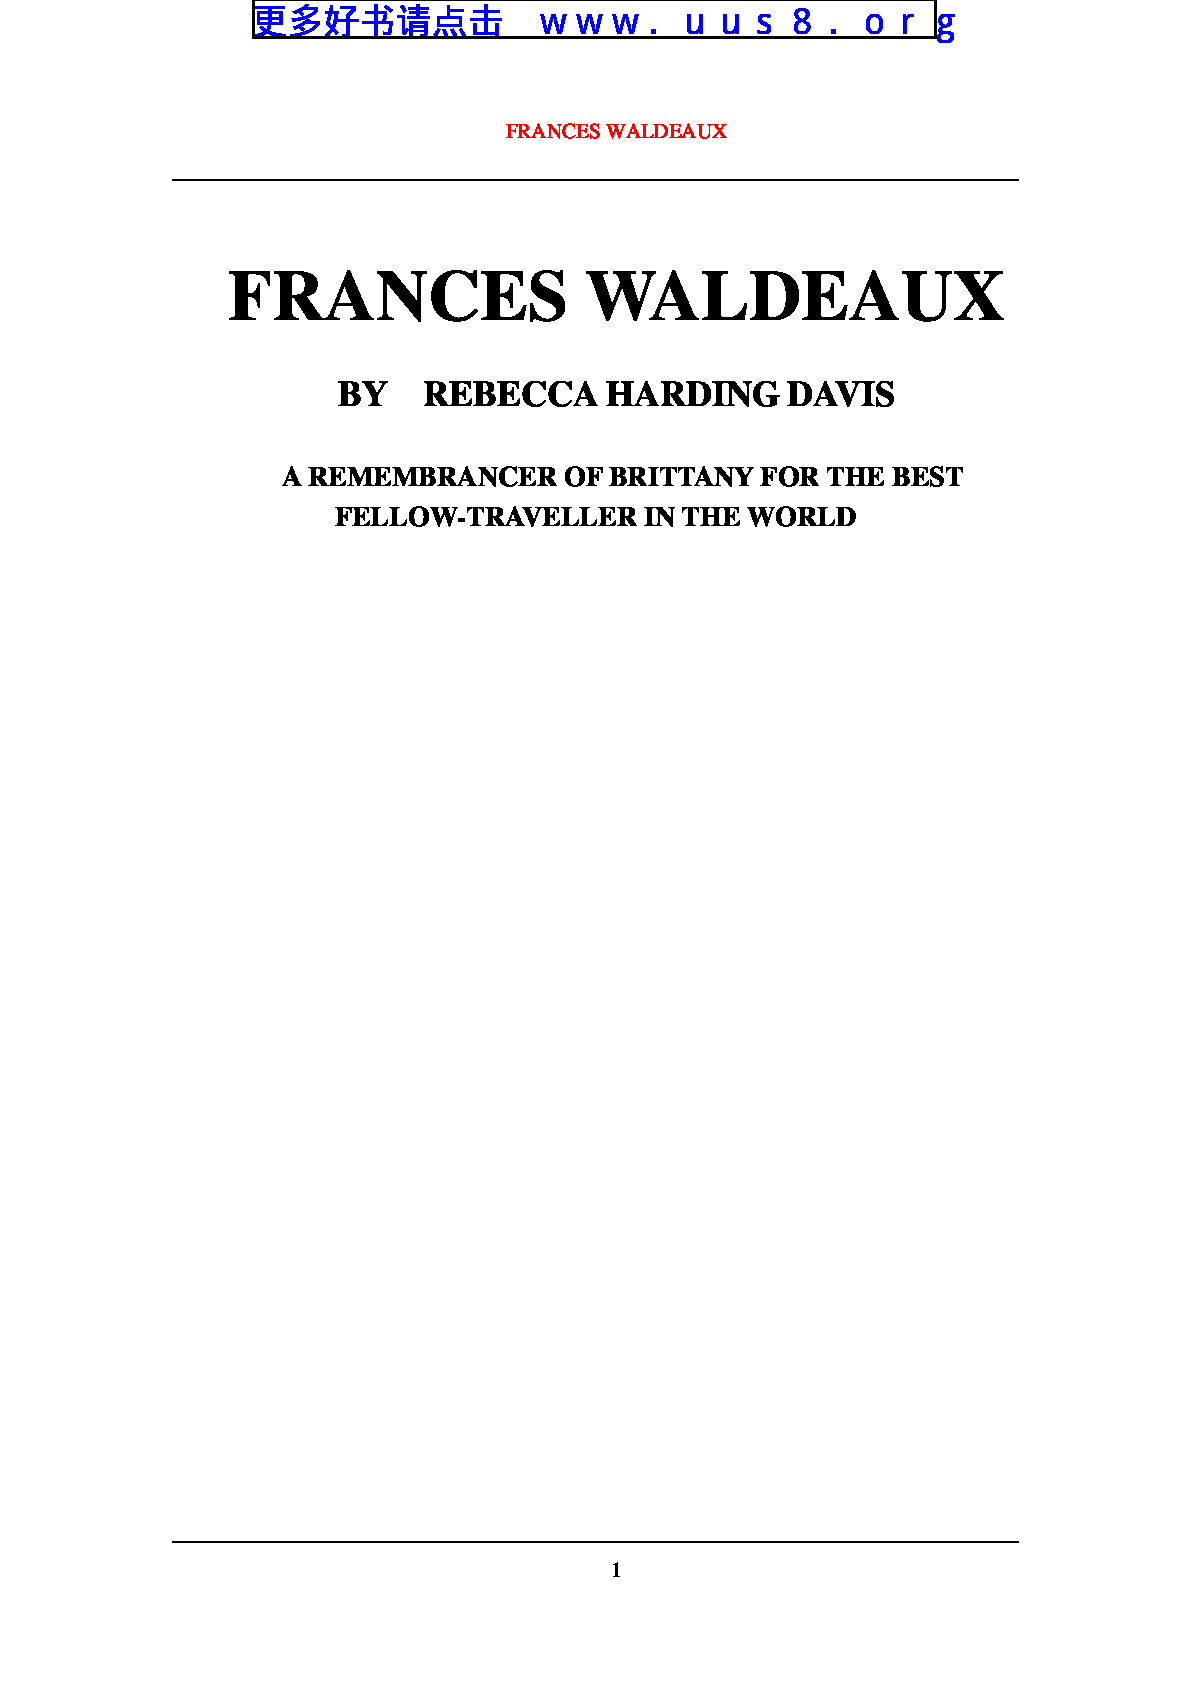 FRANCES_WALDEAUX(弗朗西斯·沃得克斯)